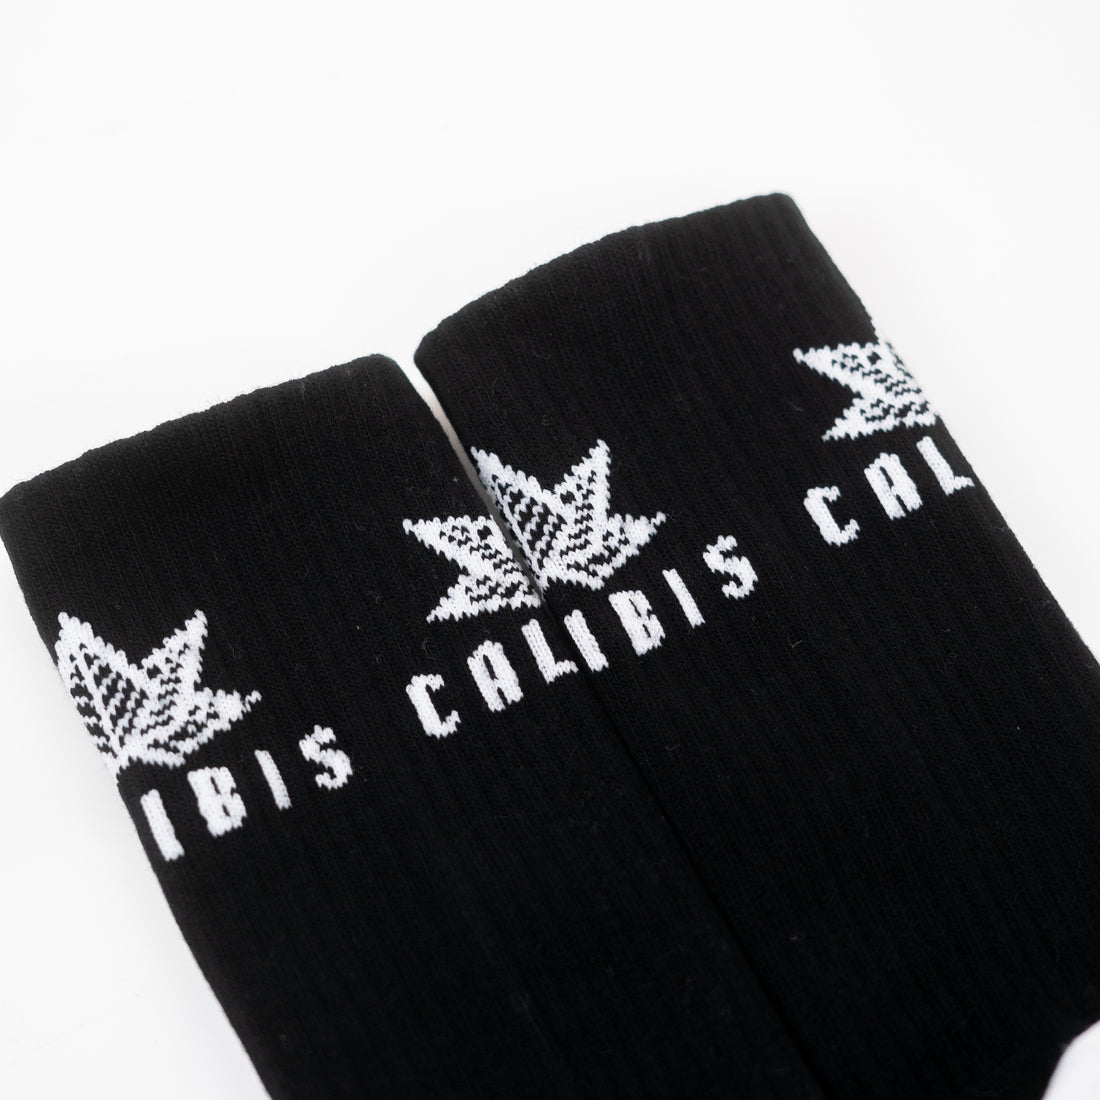 Calibis Farms Socks